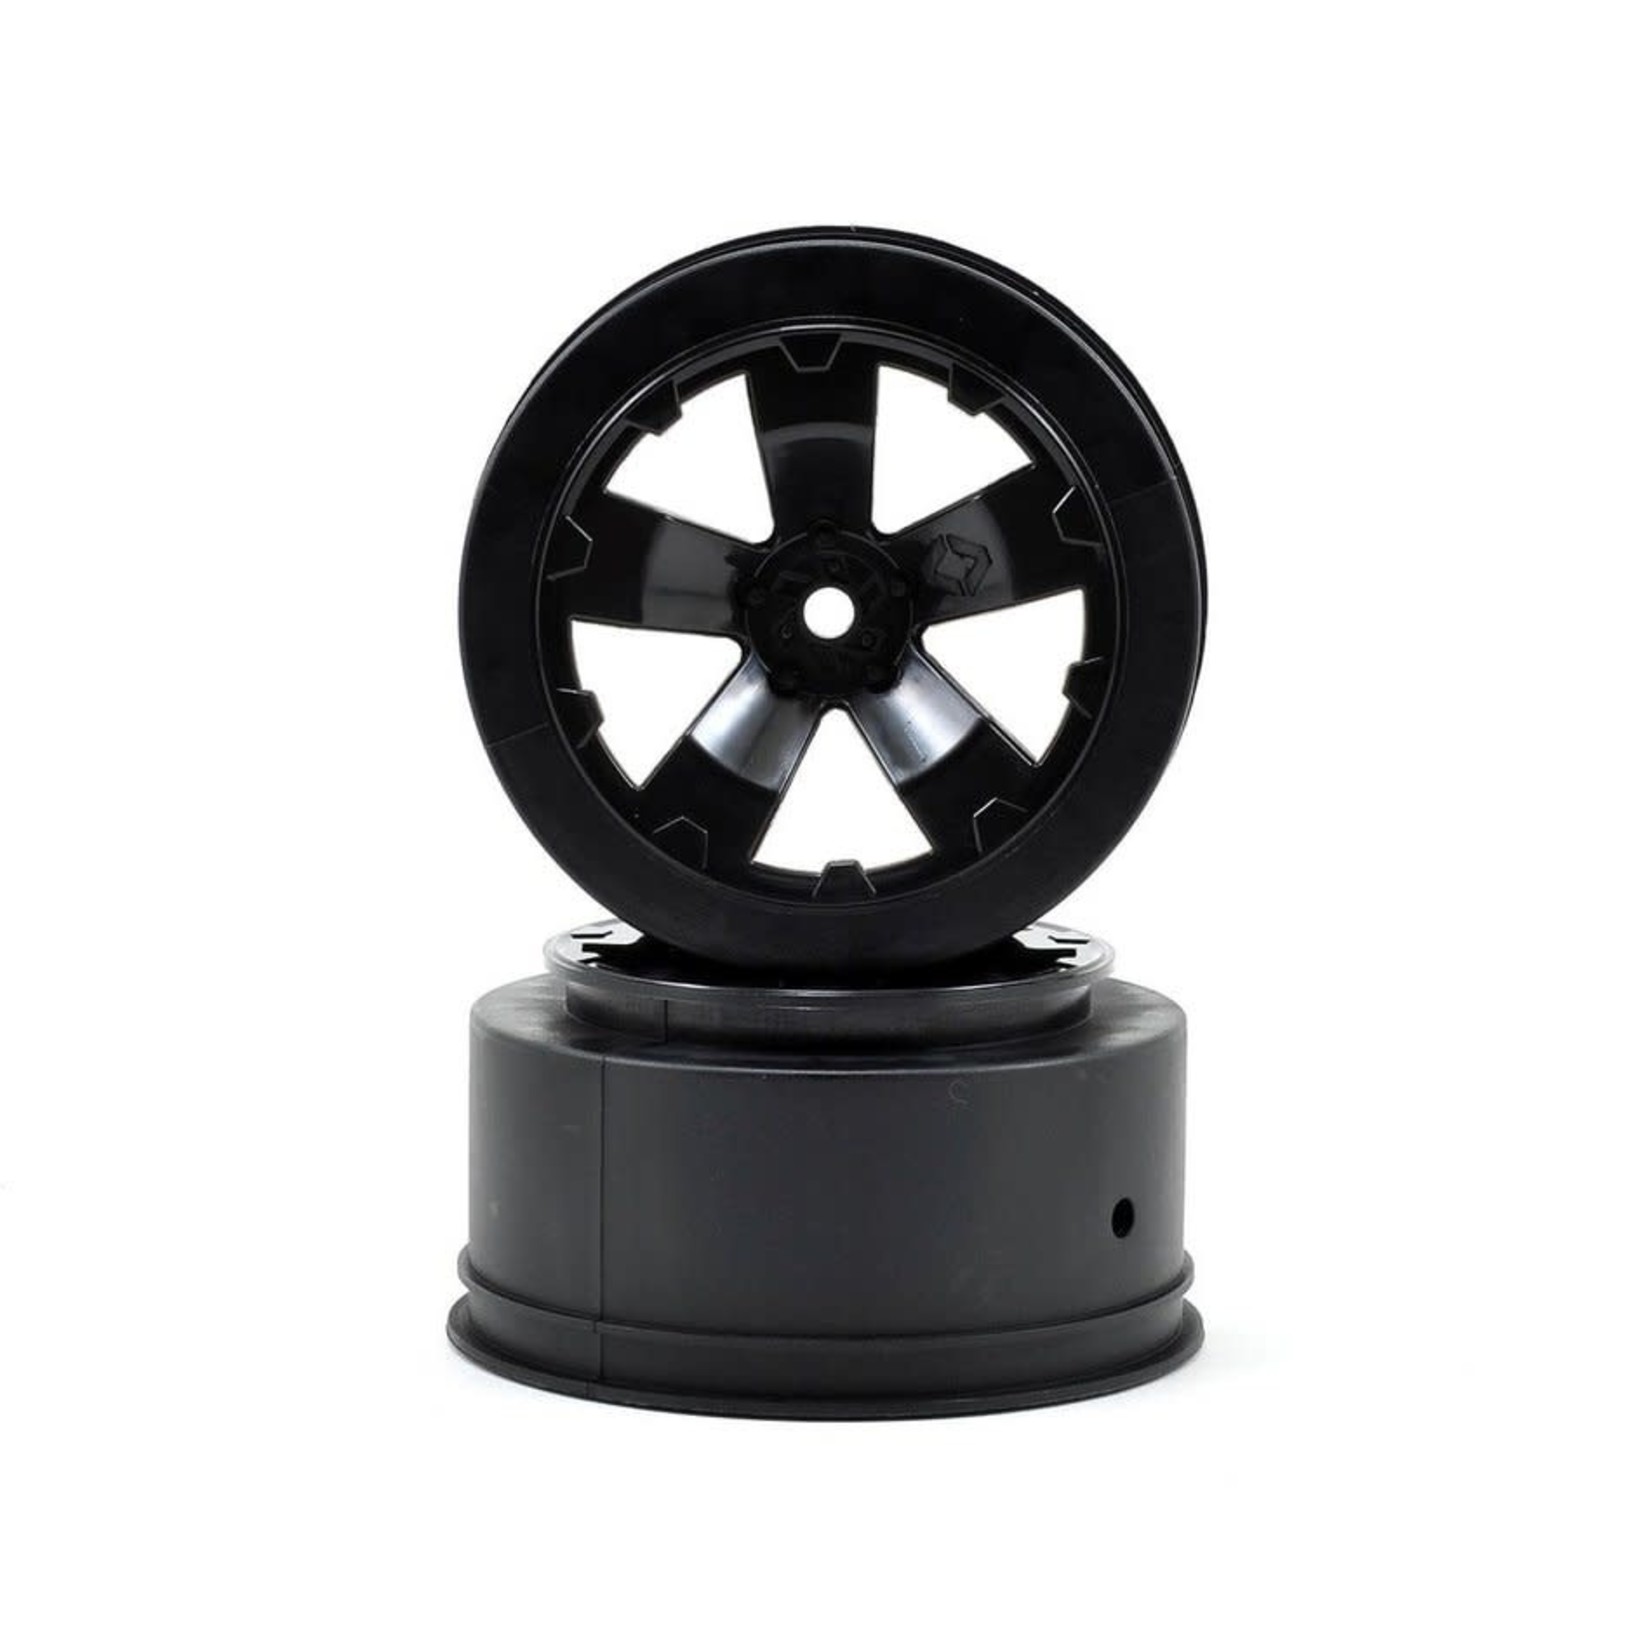 Avid RC Avid RC Sabertooth Short Course Wheels w/3mm Offset (Black) (2) (SC5M) w/12mm Hex #AV1100-B